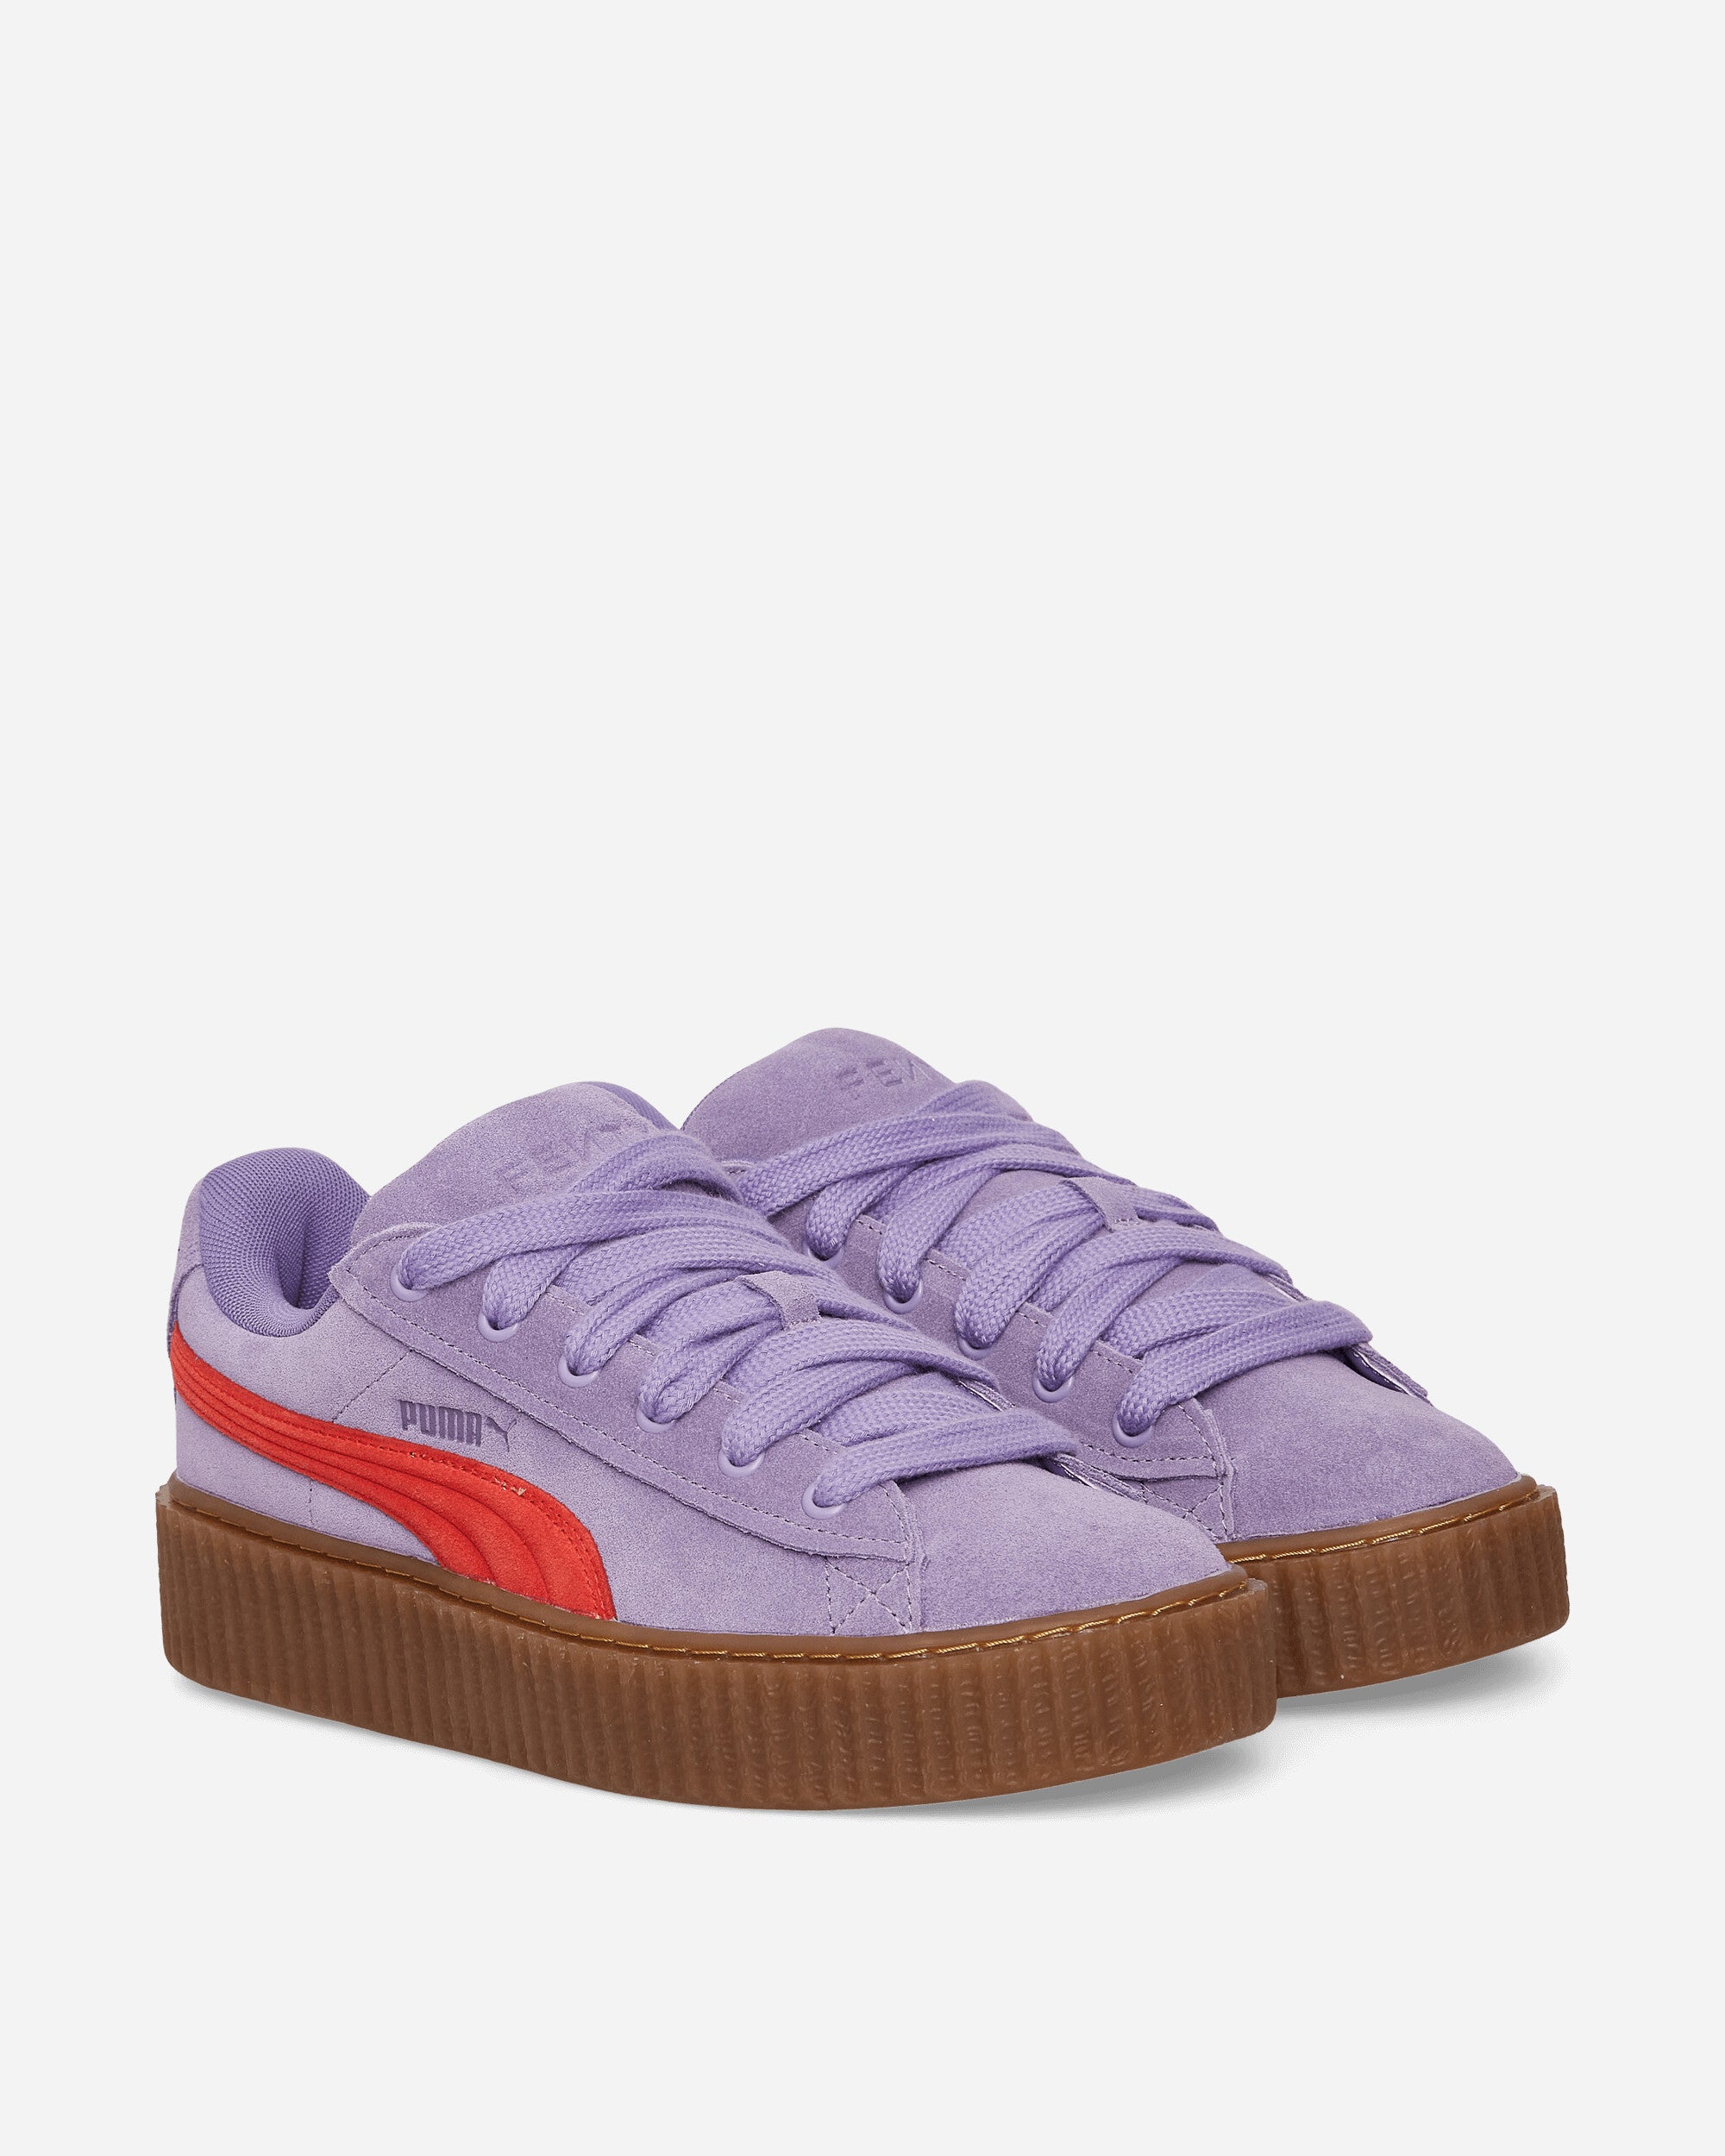 FENTY Creeper Phatty Sneakers Lavender Alert / Burnt Red